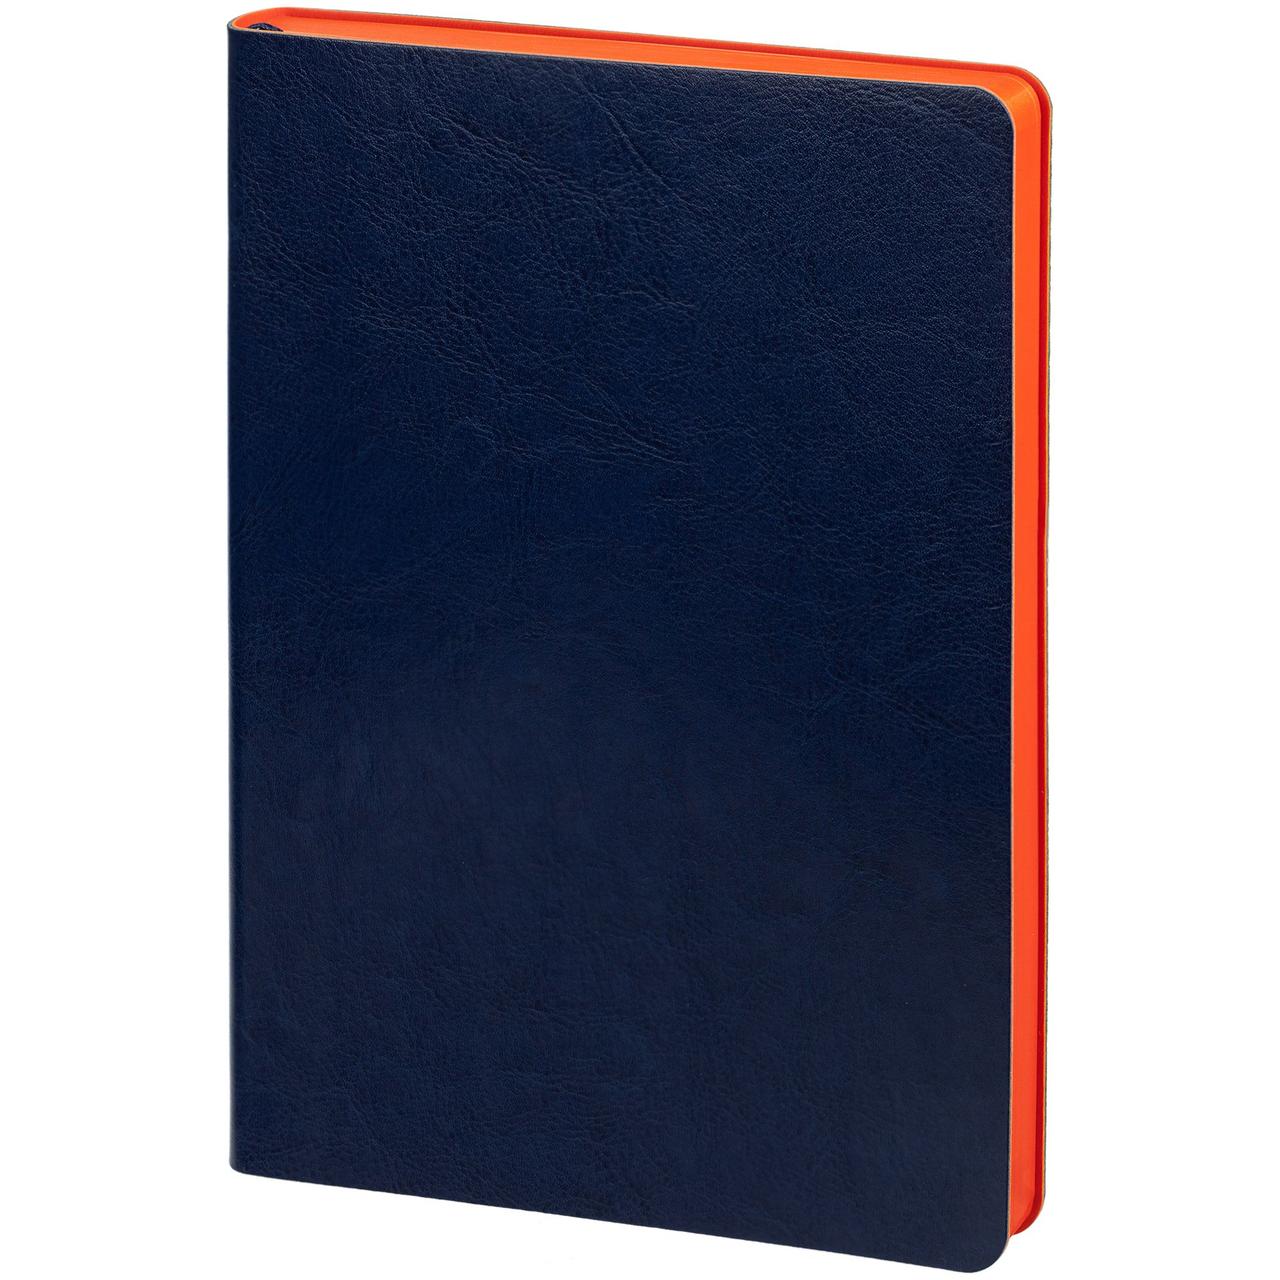 Ежедневник Slip, недатированный, синий с оранжевым (артикул 16022.42)